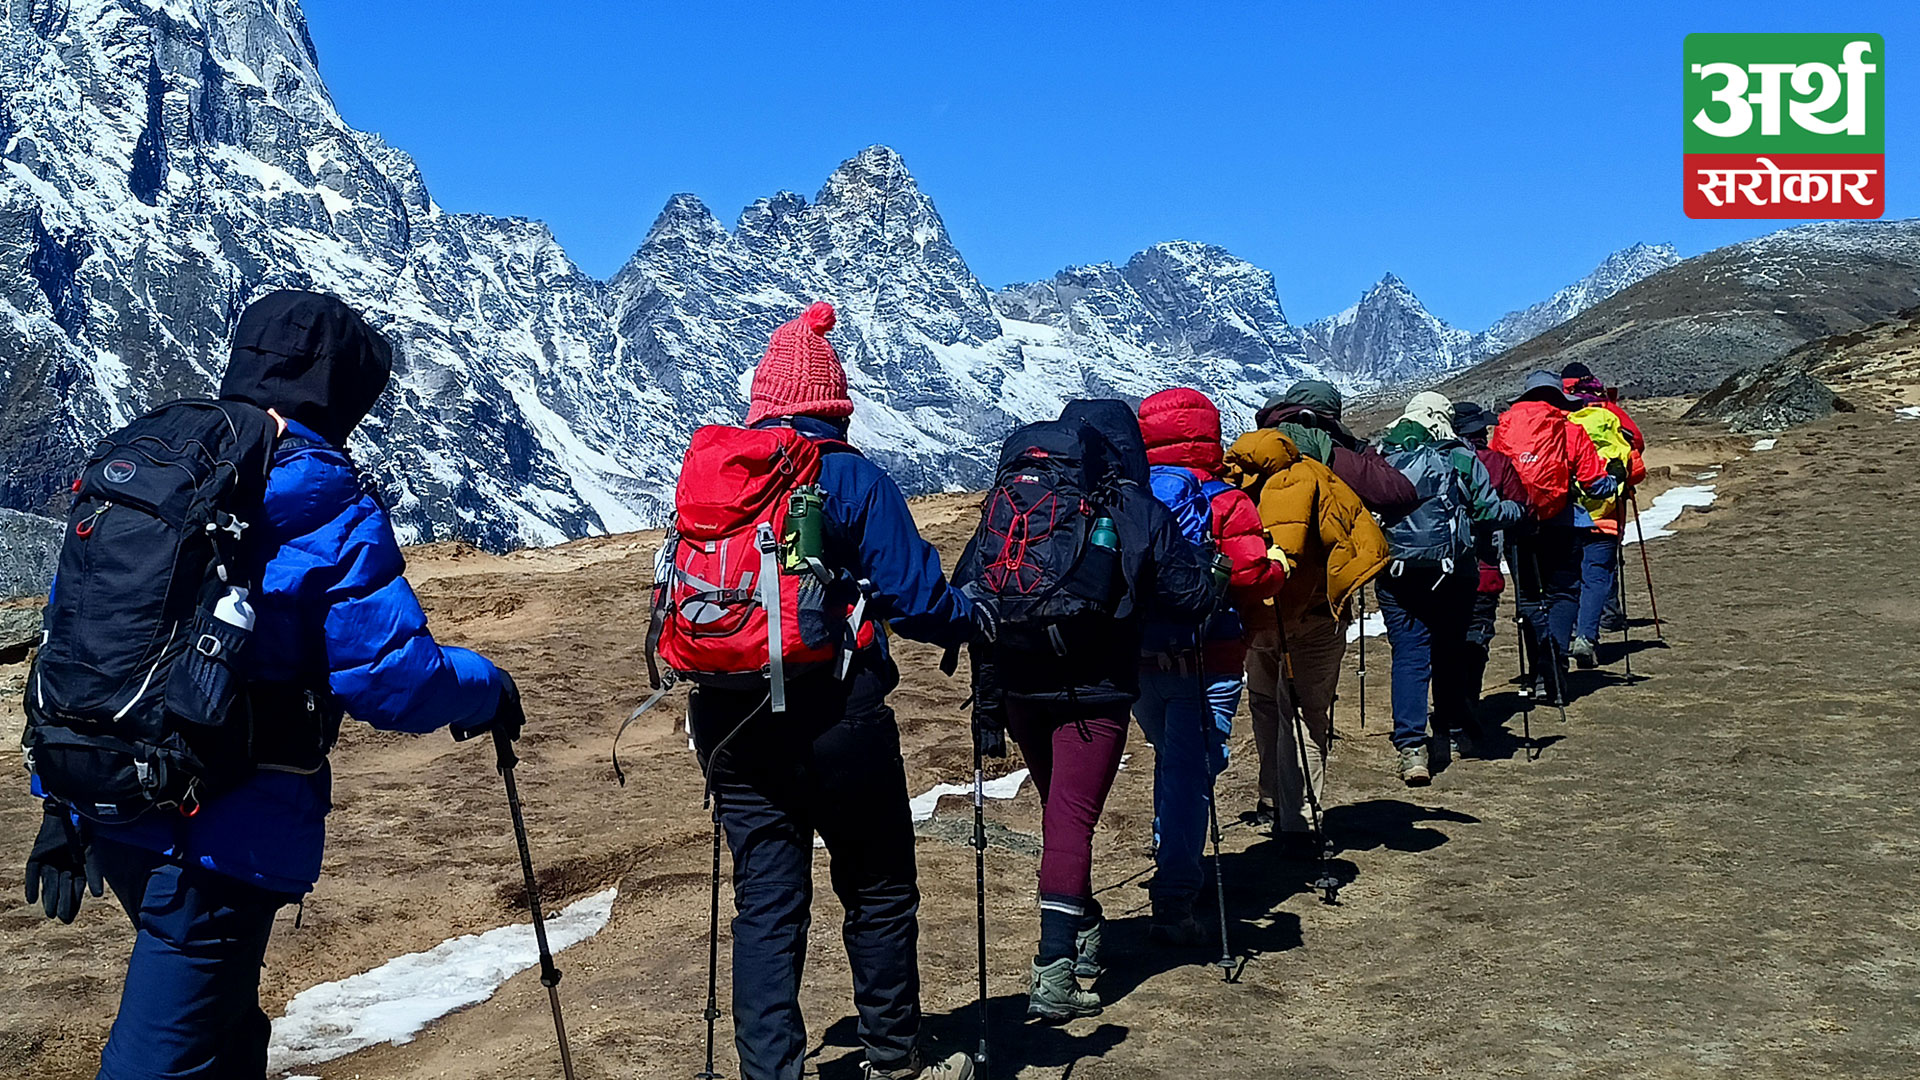 Annapurna region receives 30k tourists in a month